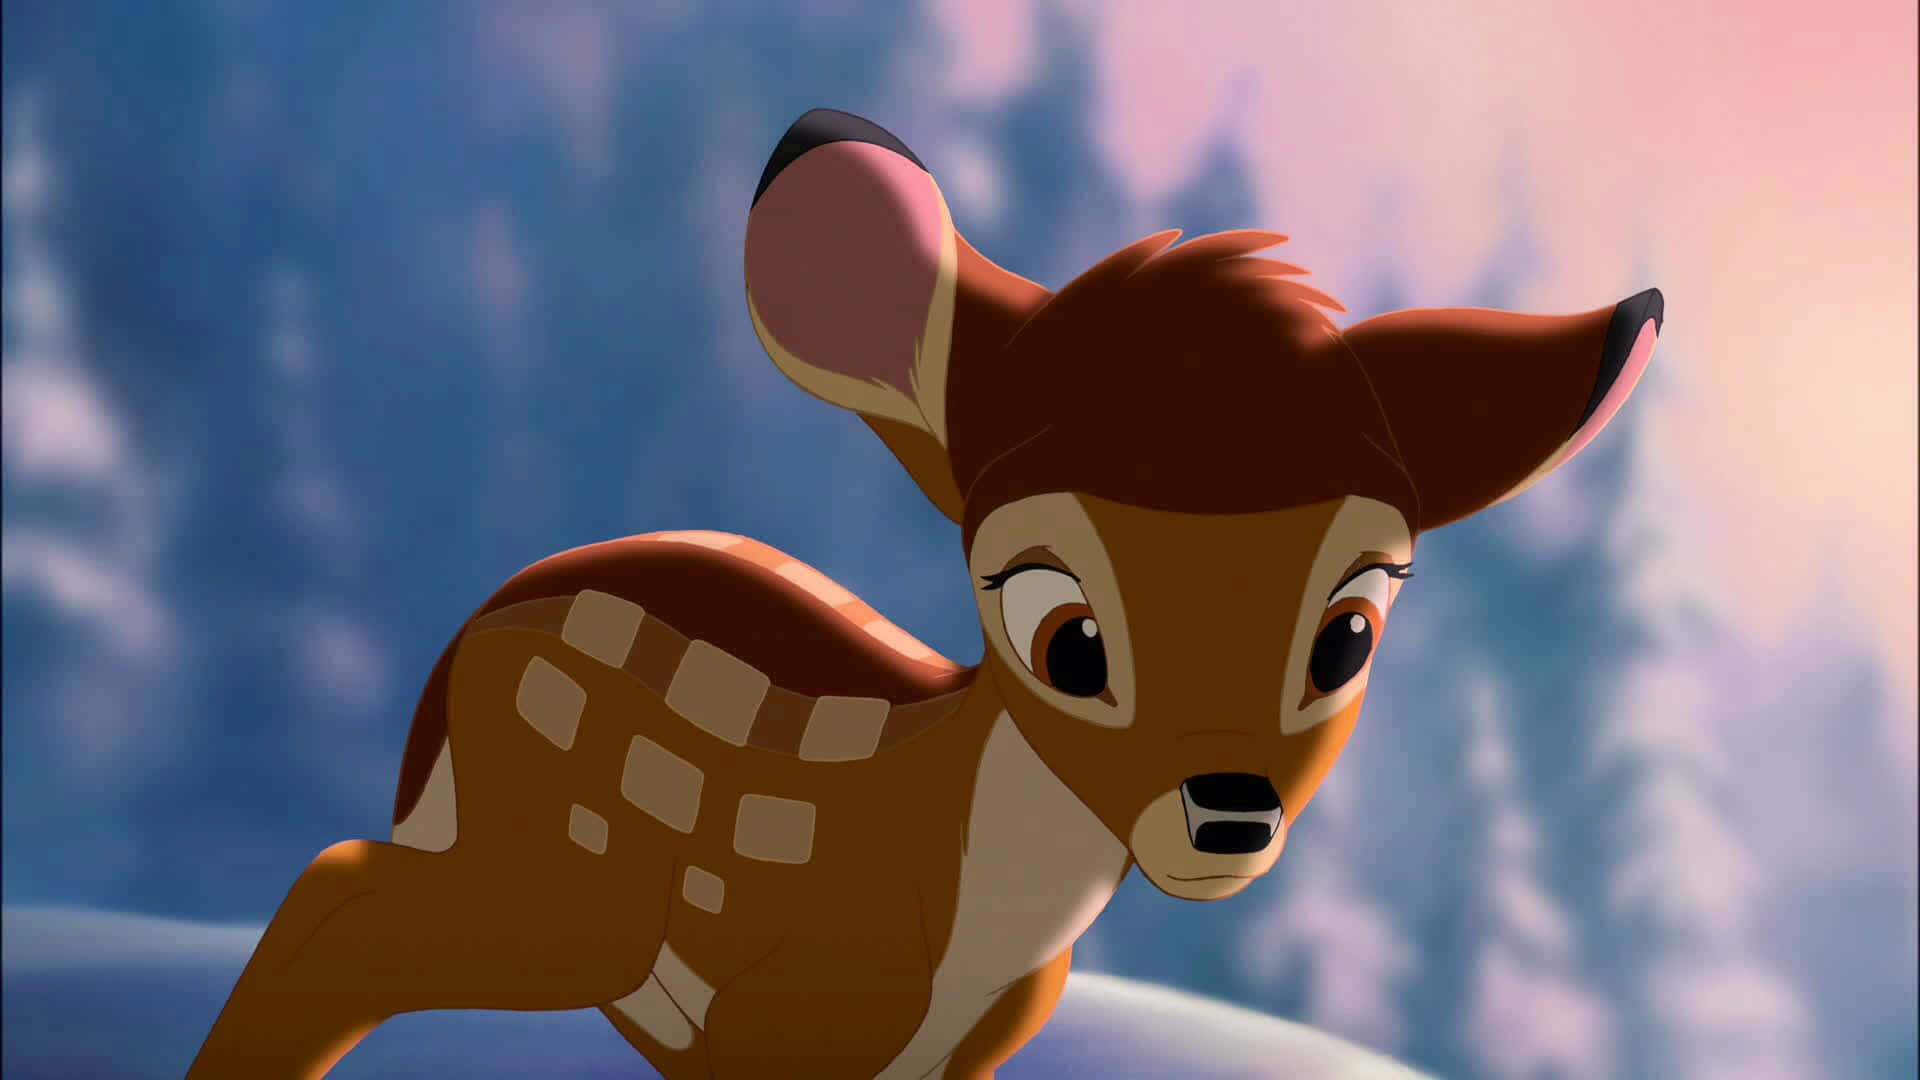 A heartfelt scene from Disney's classic Bambi